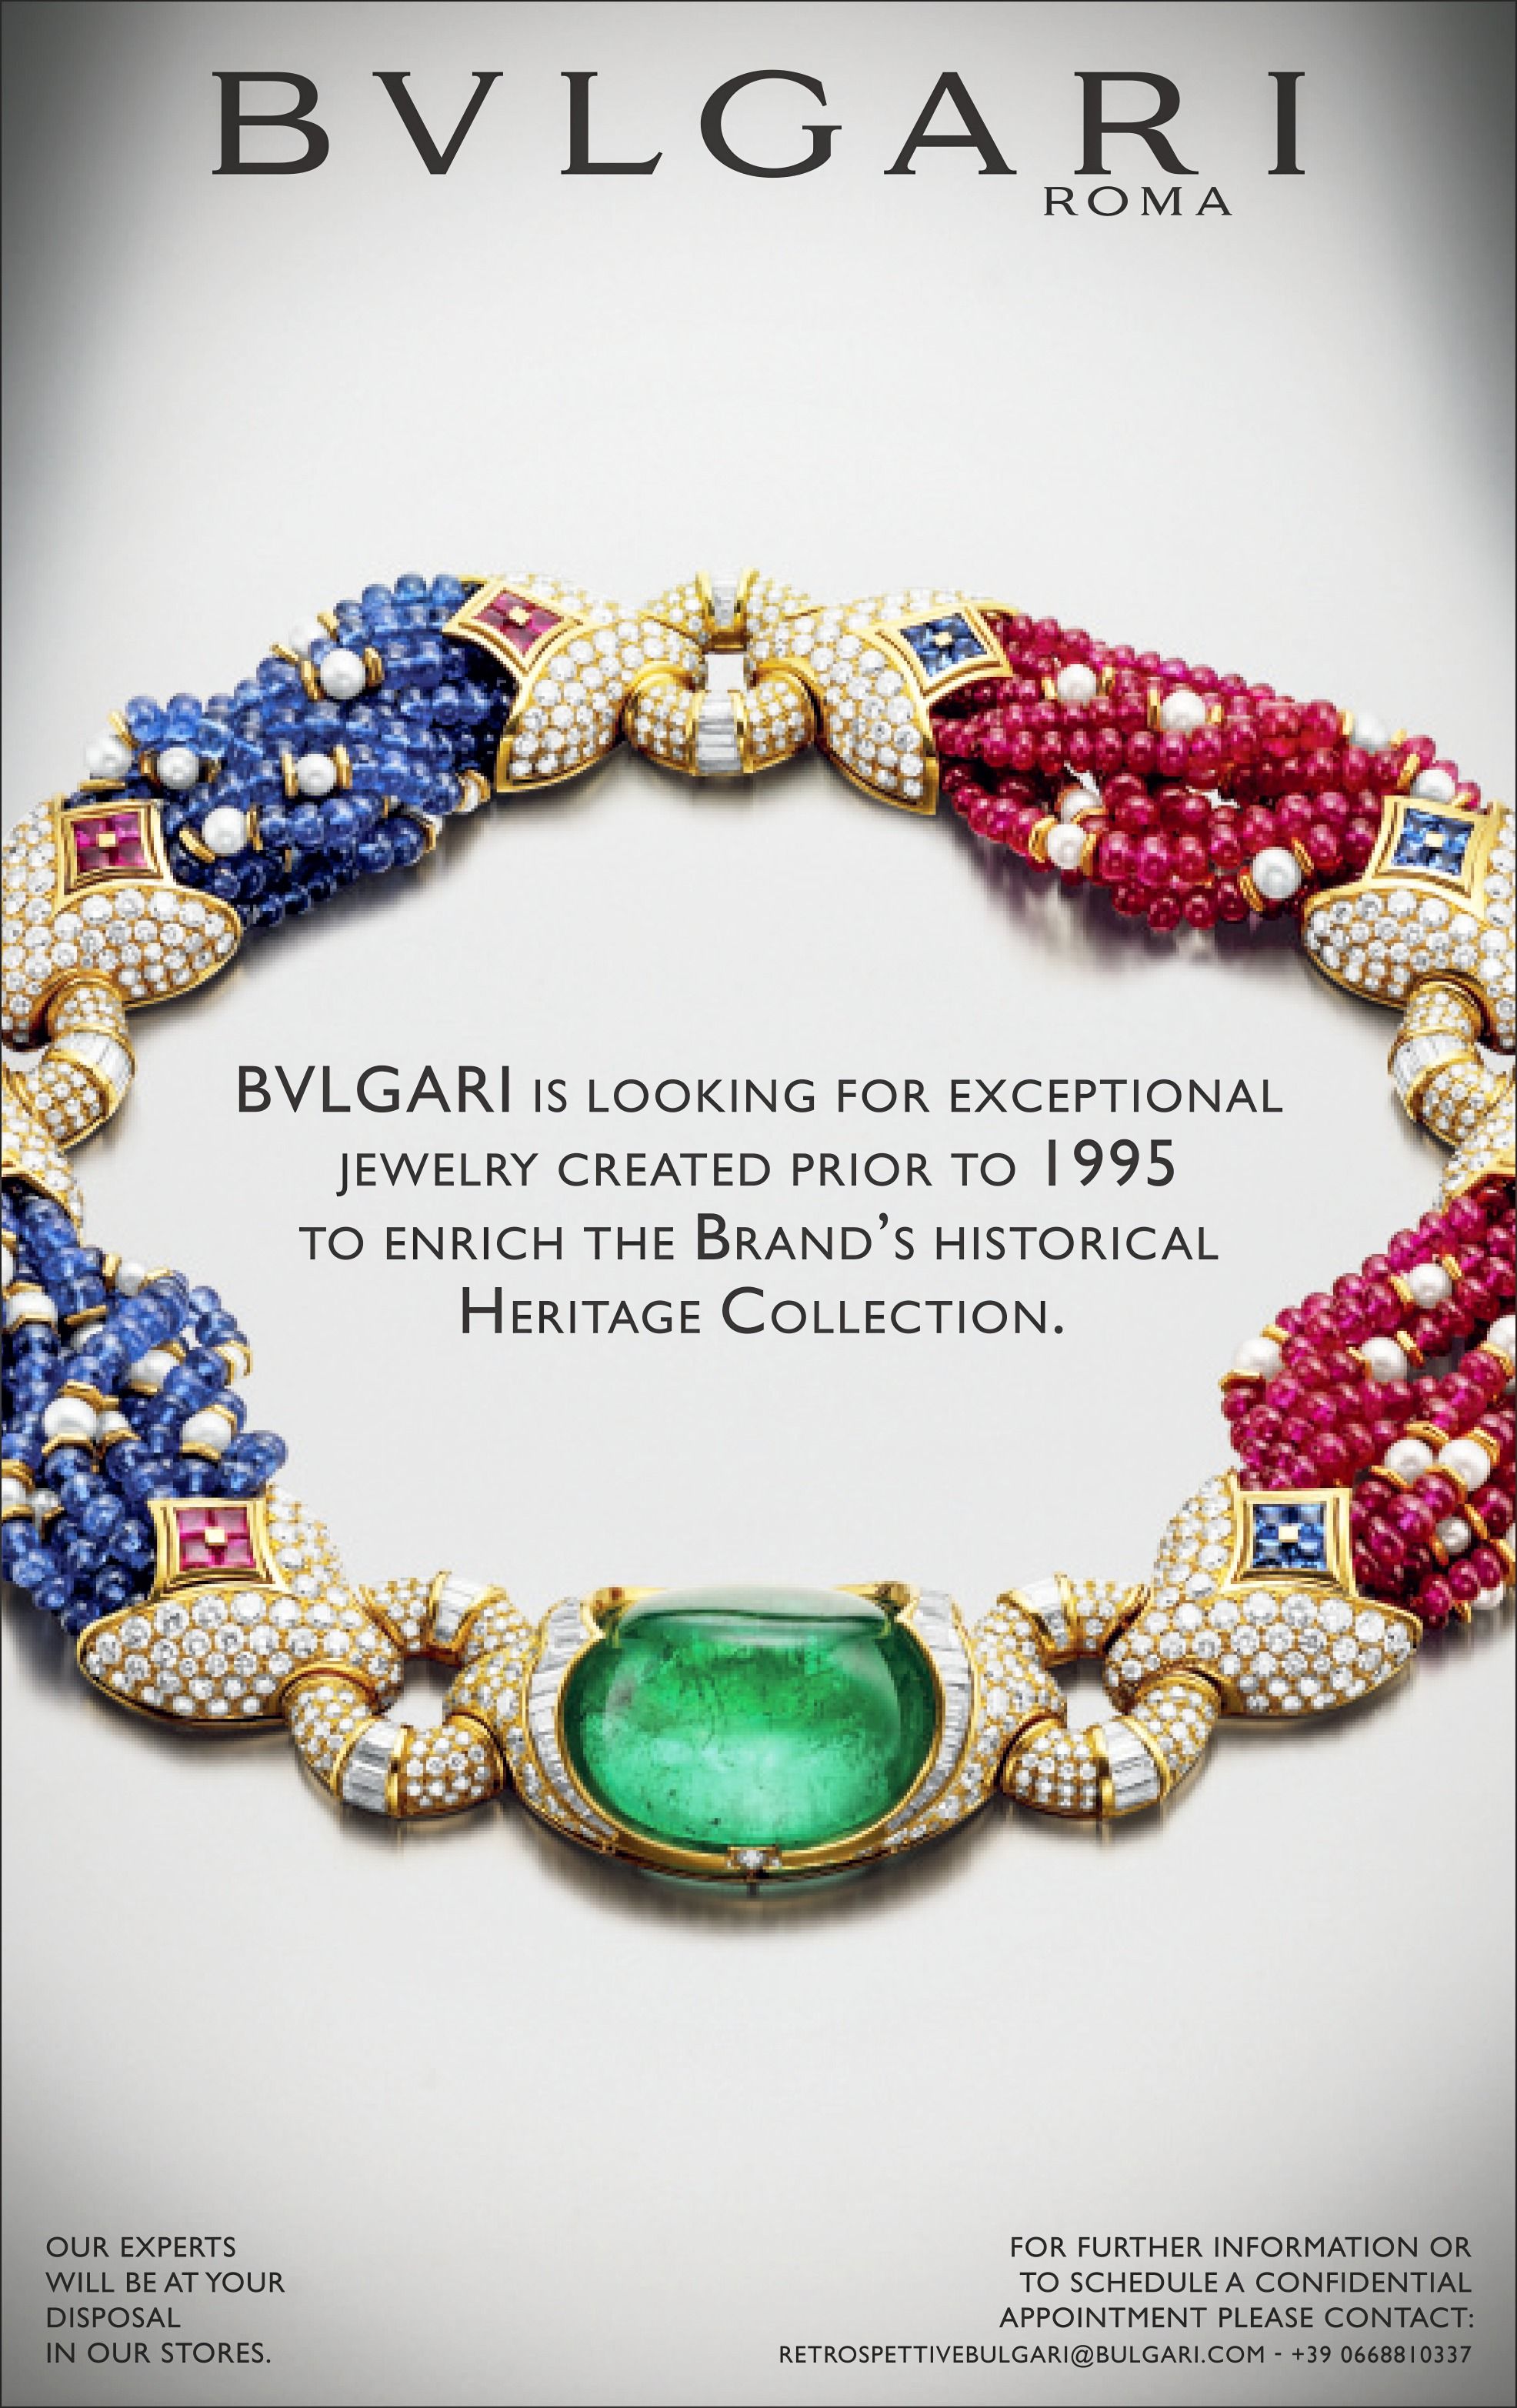 How to Verify the Authenticity of Bulgari Jewellery? - The Luxury Hut